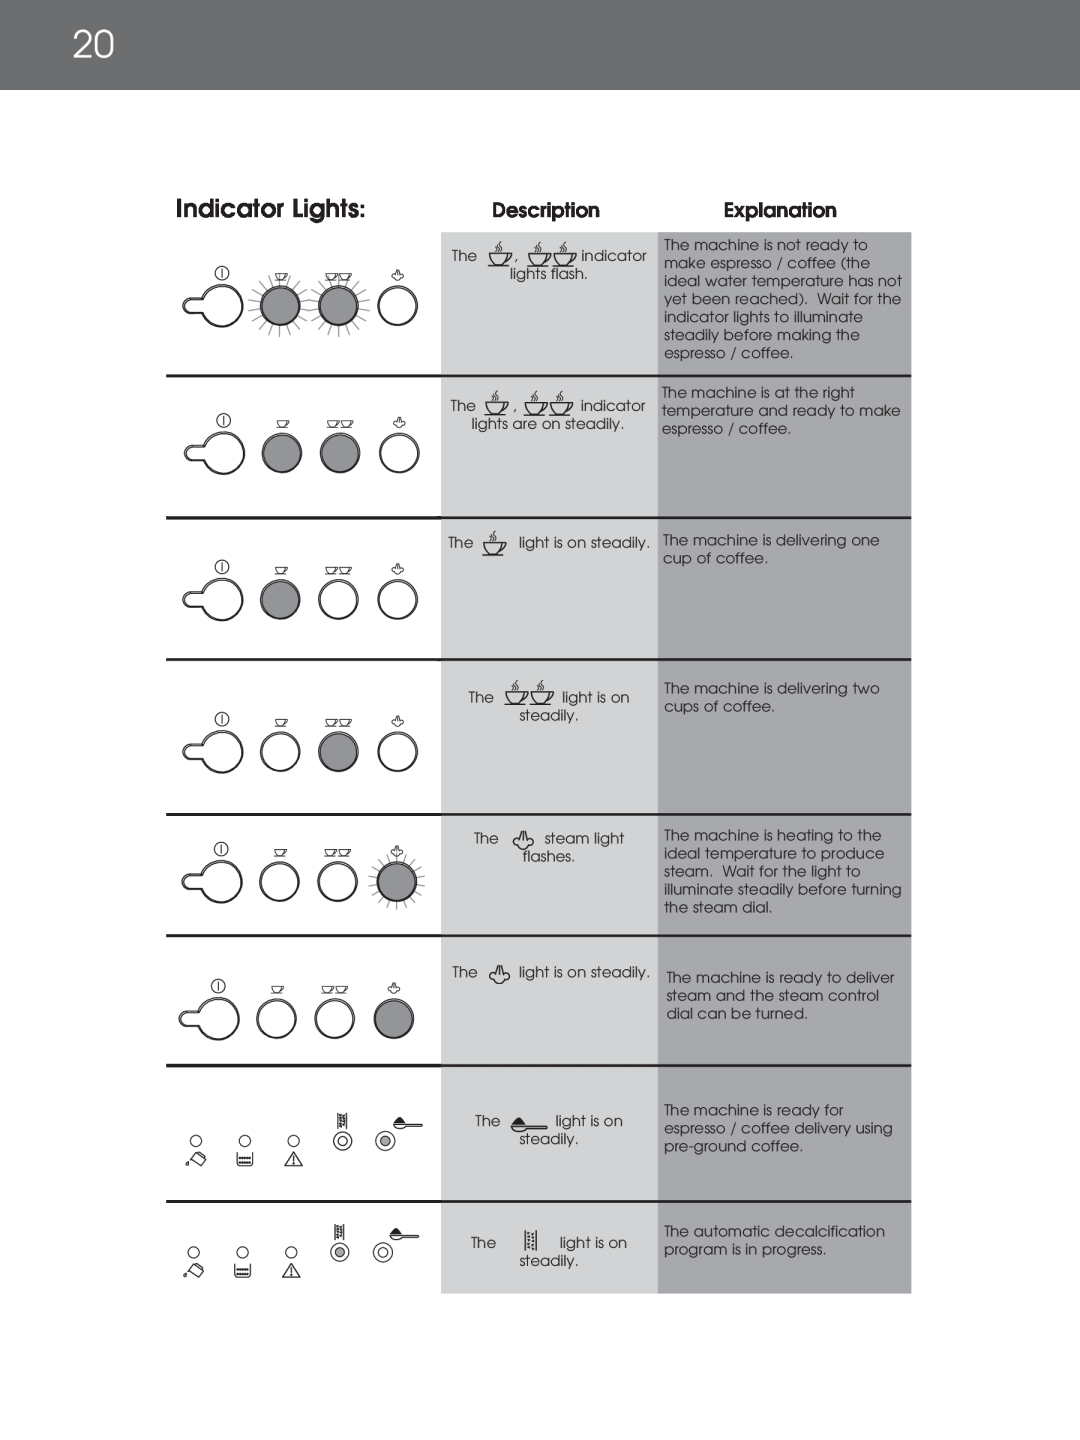 DeLonghi EAM4000 instruction manual Indicator Lights, Description, Explanation 